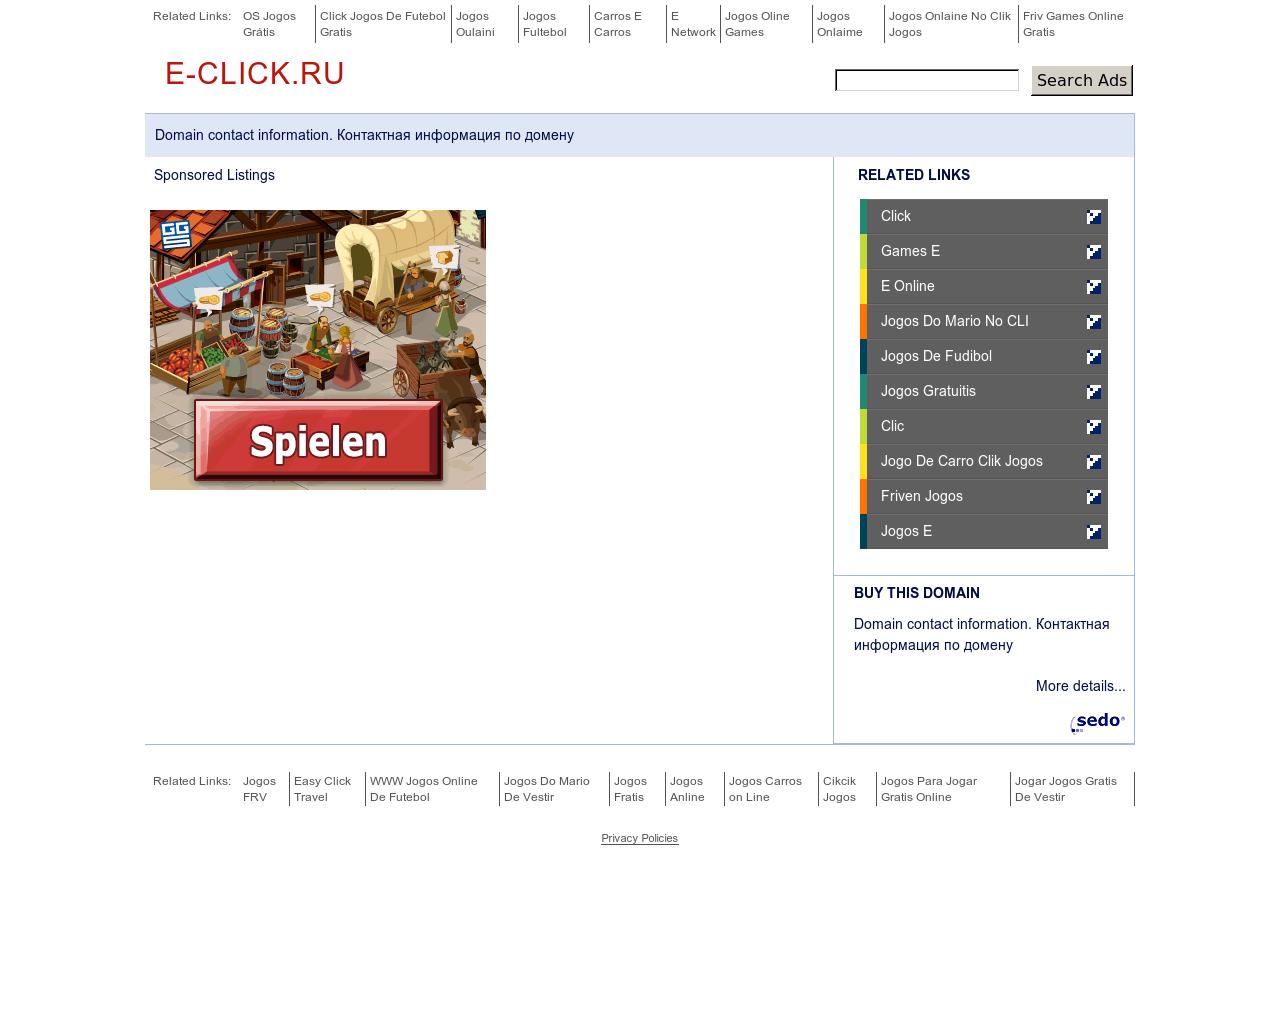 Изображение сайта e-click.ru в разрешении 1280x1024